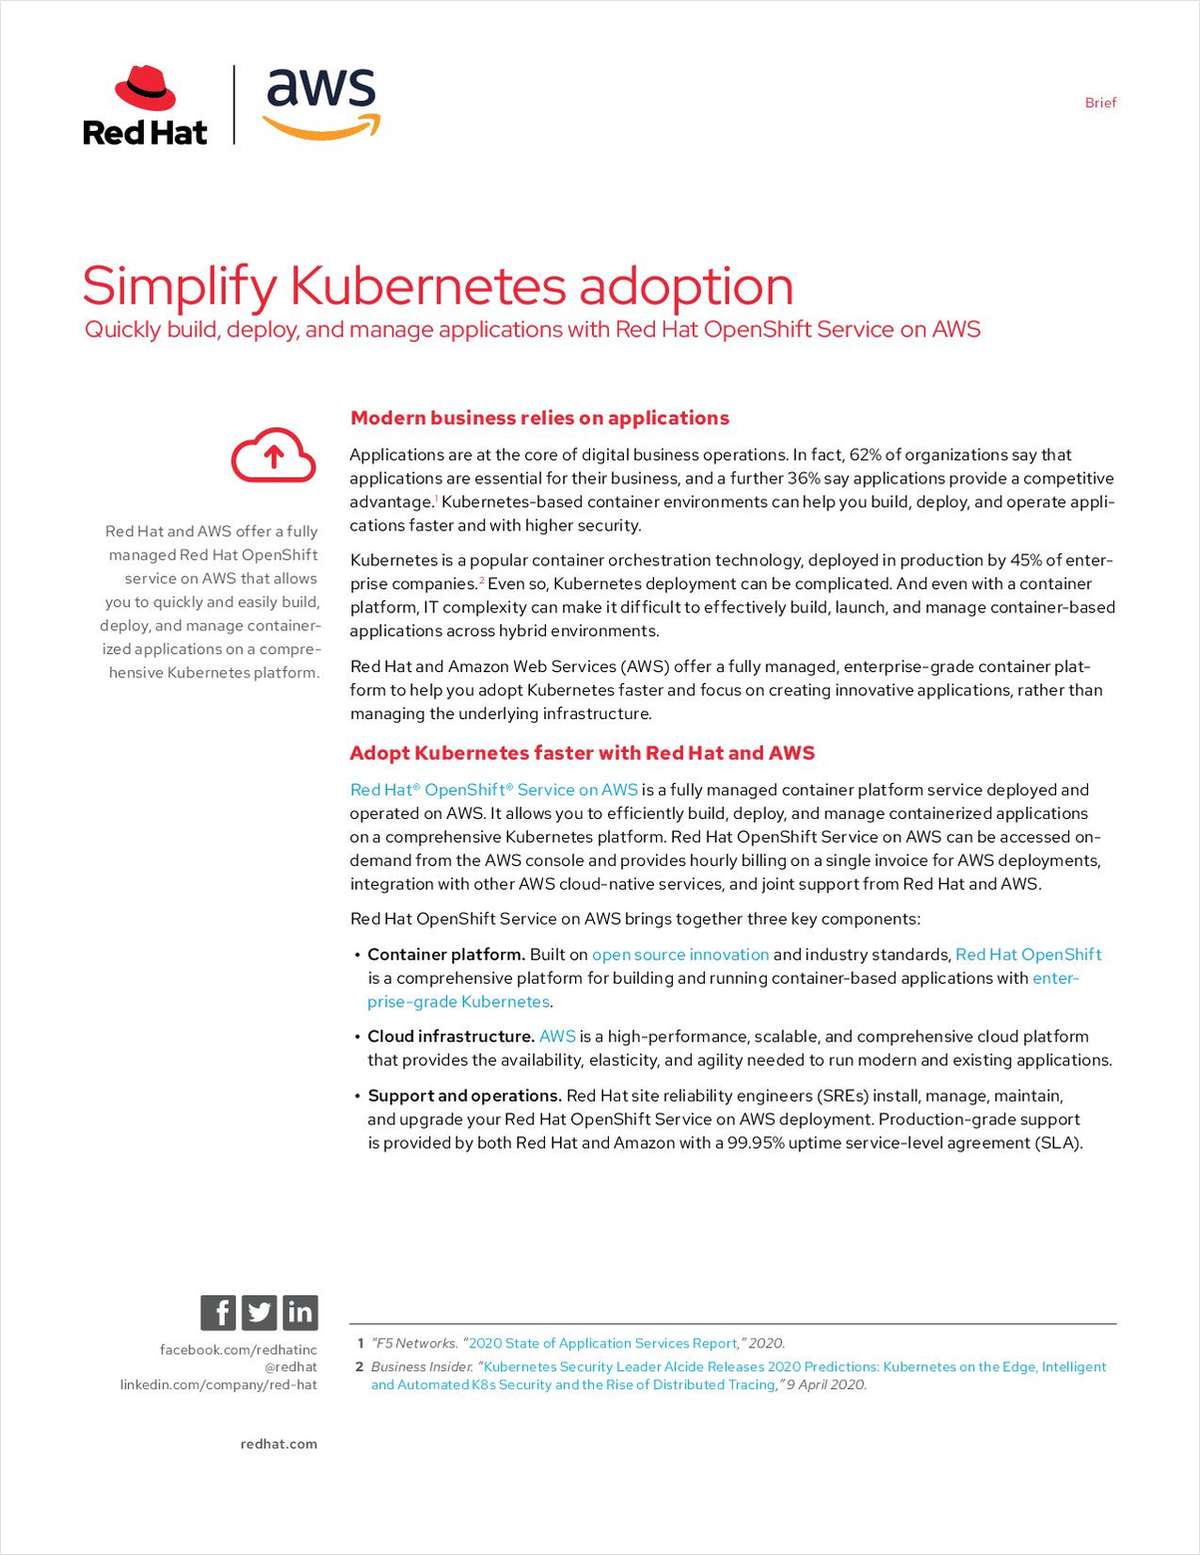 Strategies for Simplifying Kubernetes Adoption